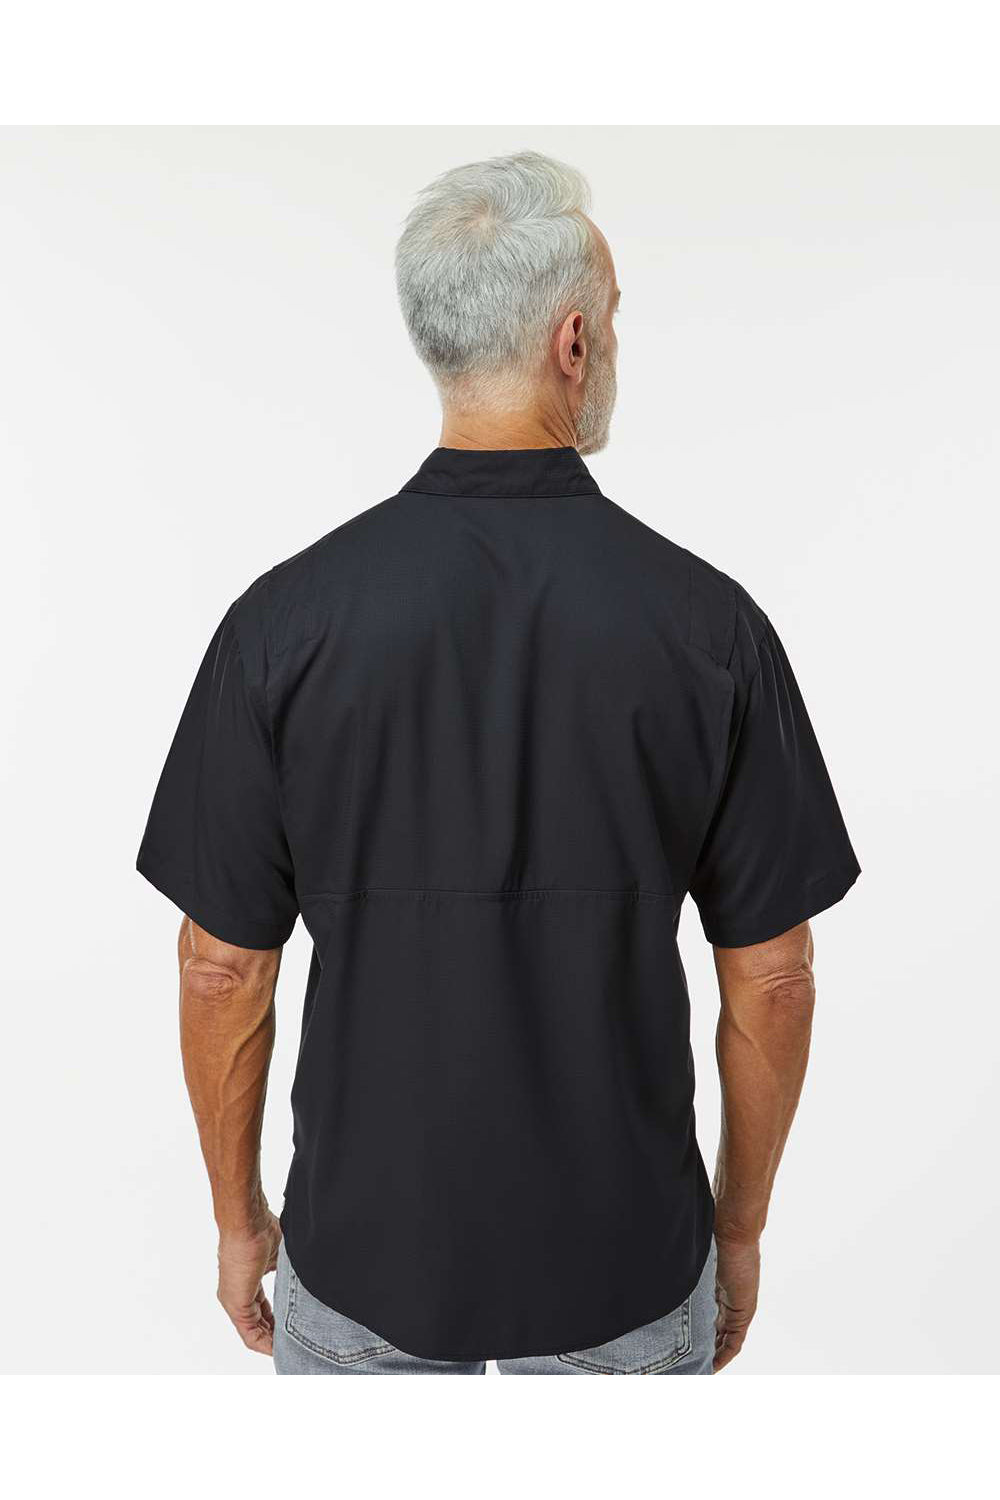 Paragon 700 Mens Hatteras Performance Short Sleeve Button Down Shirt Black Model Back